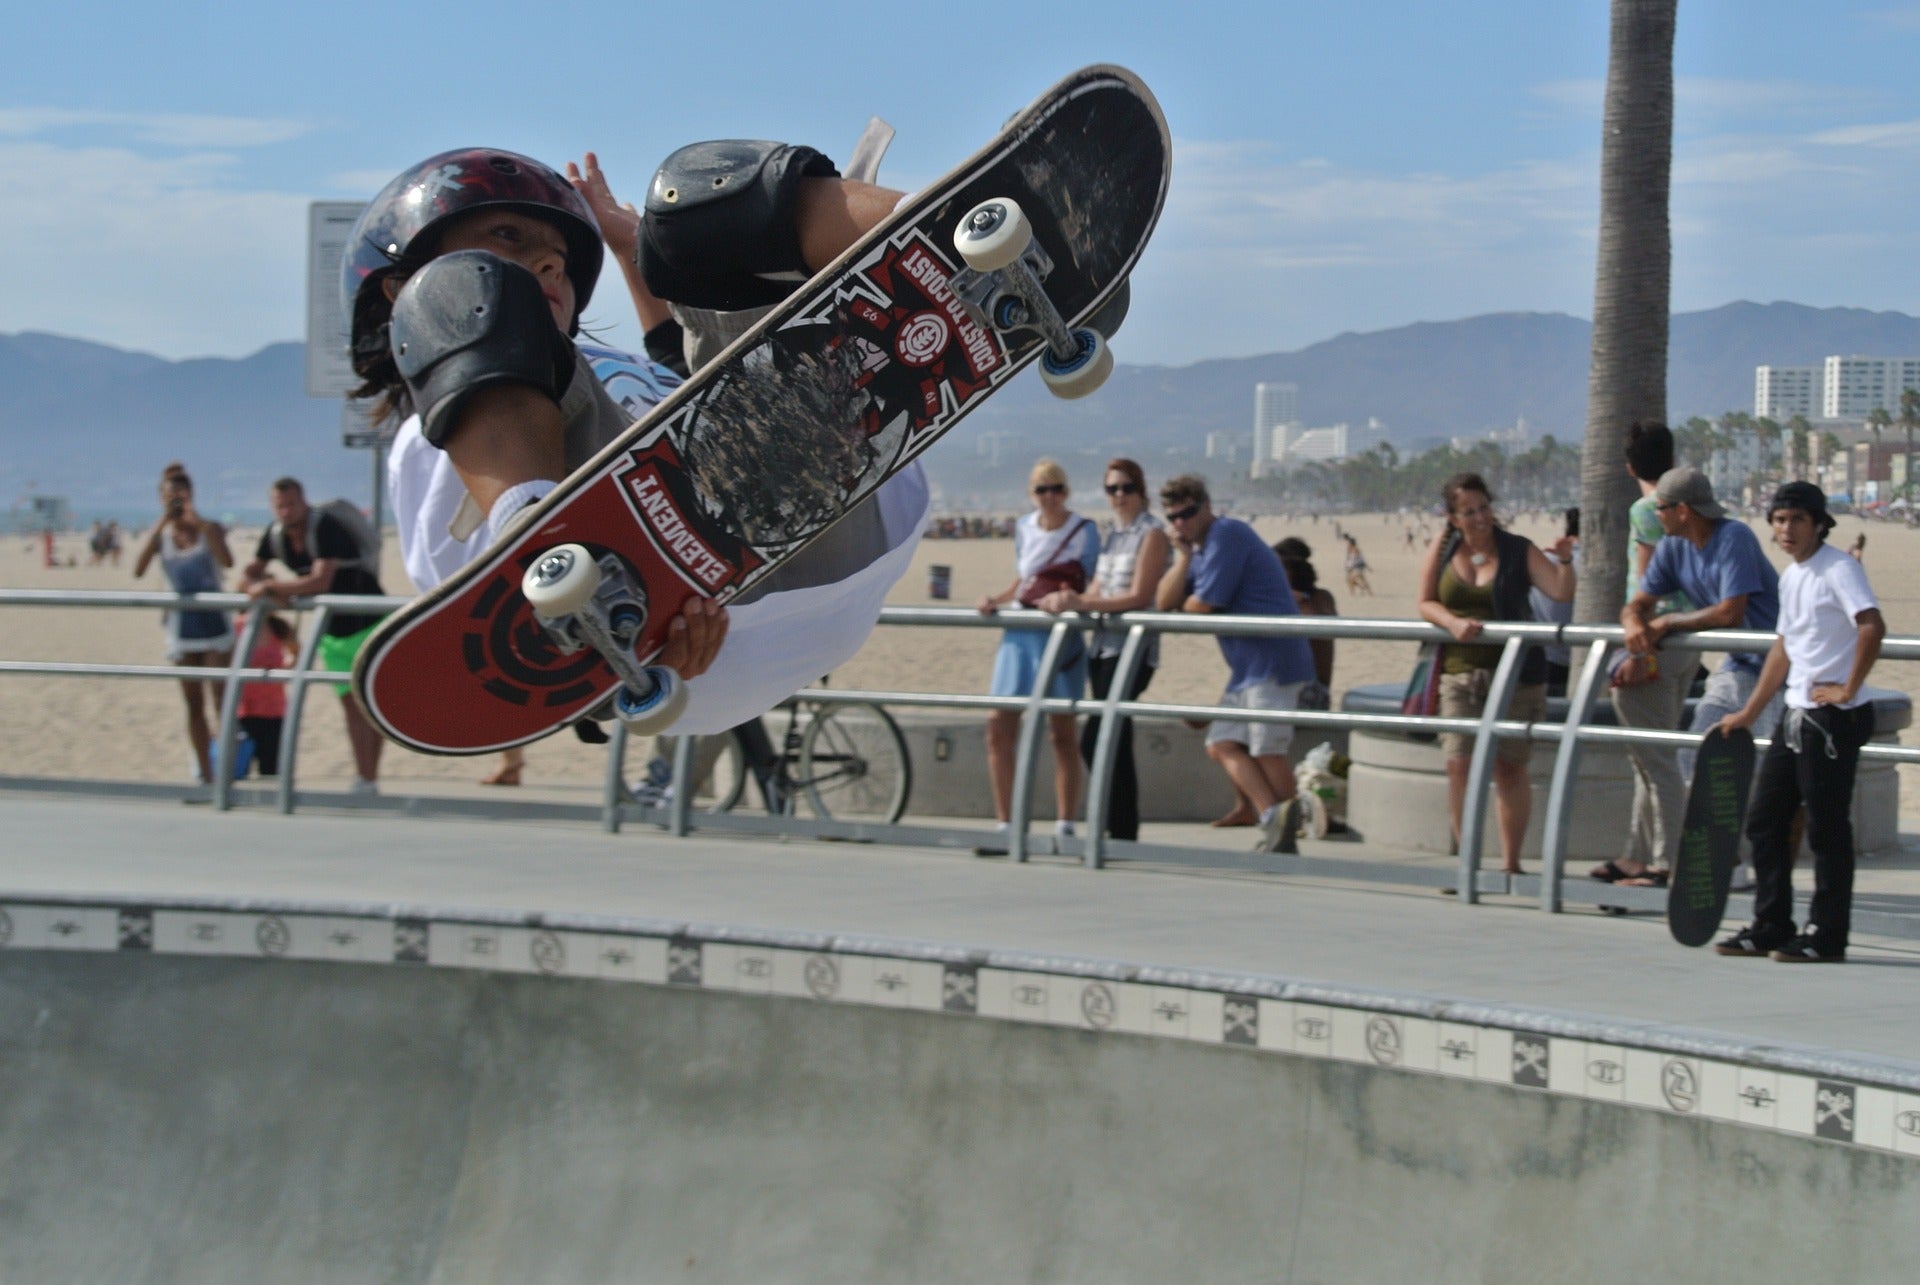 20 Best Skateparks In California